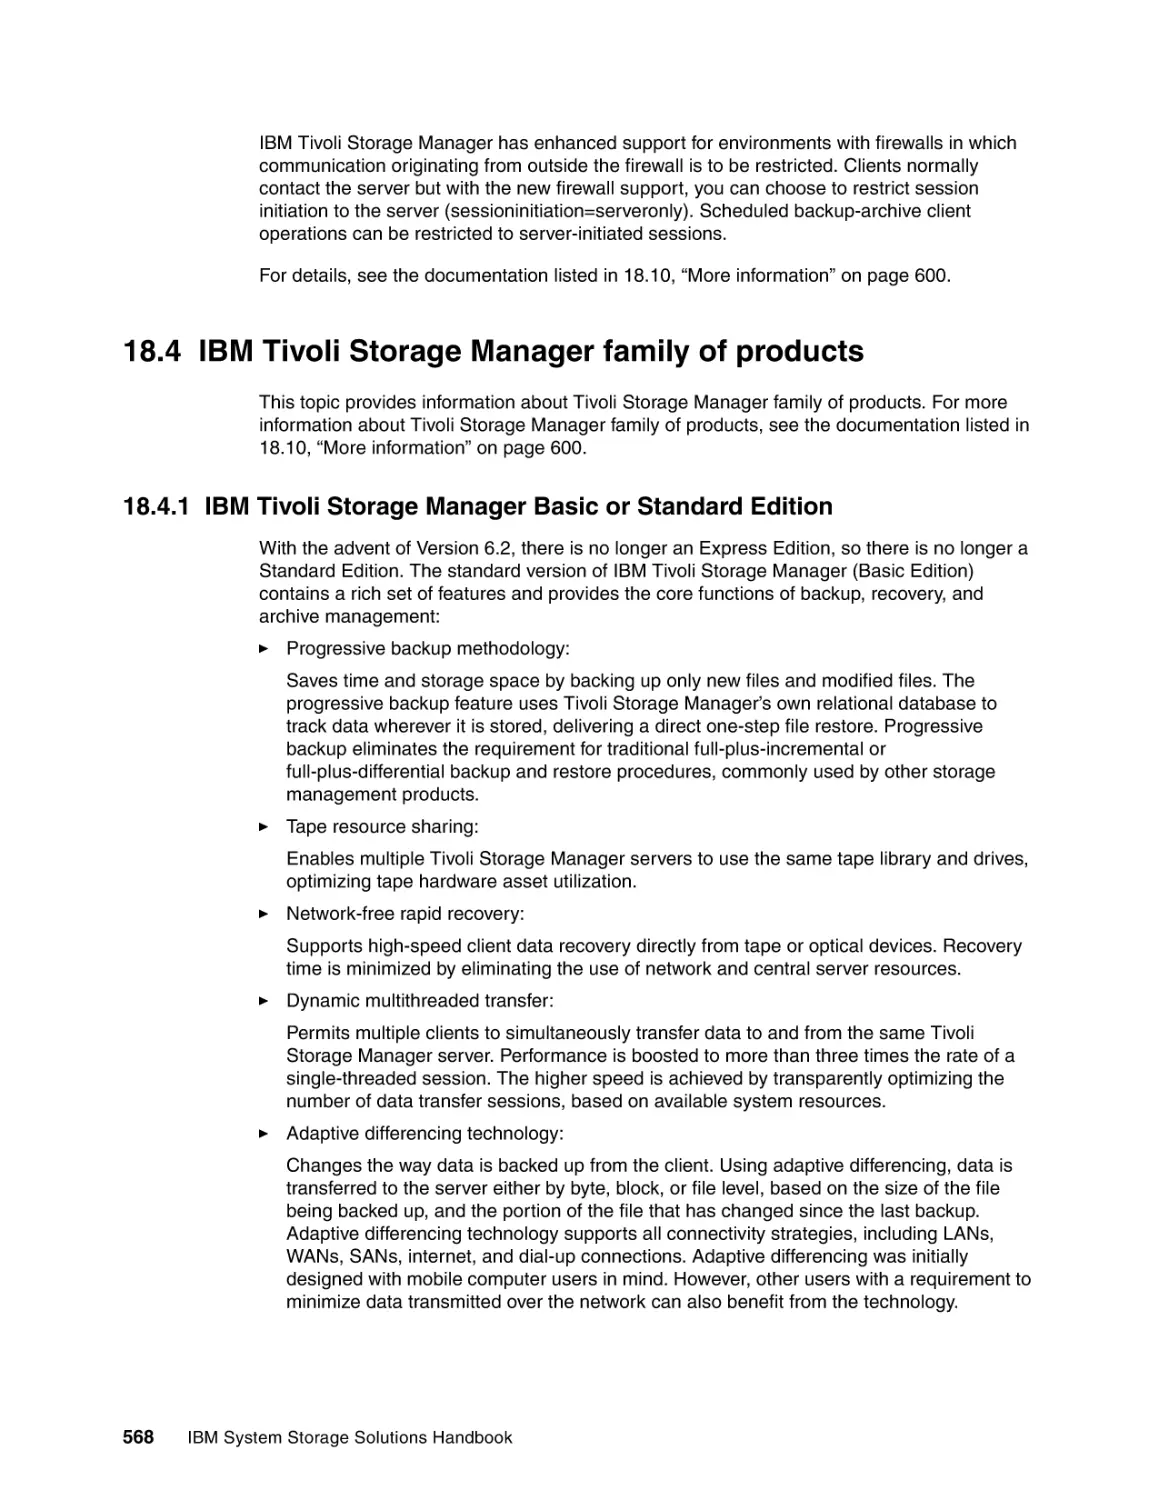 18.4 IBM Tivoli Storage Manager family of products
18.4.1 IBM Tivoli Storage Manager Basic or Standard Edition